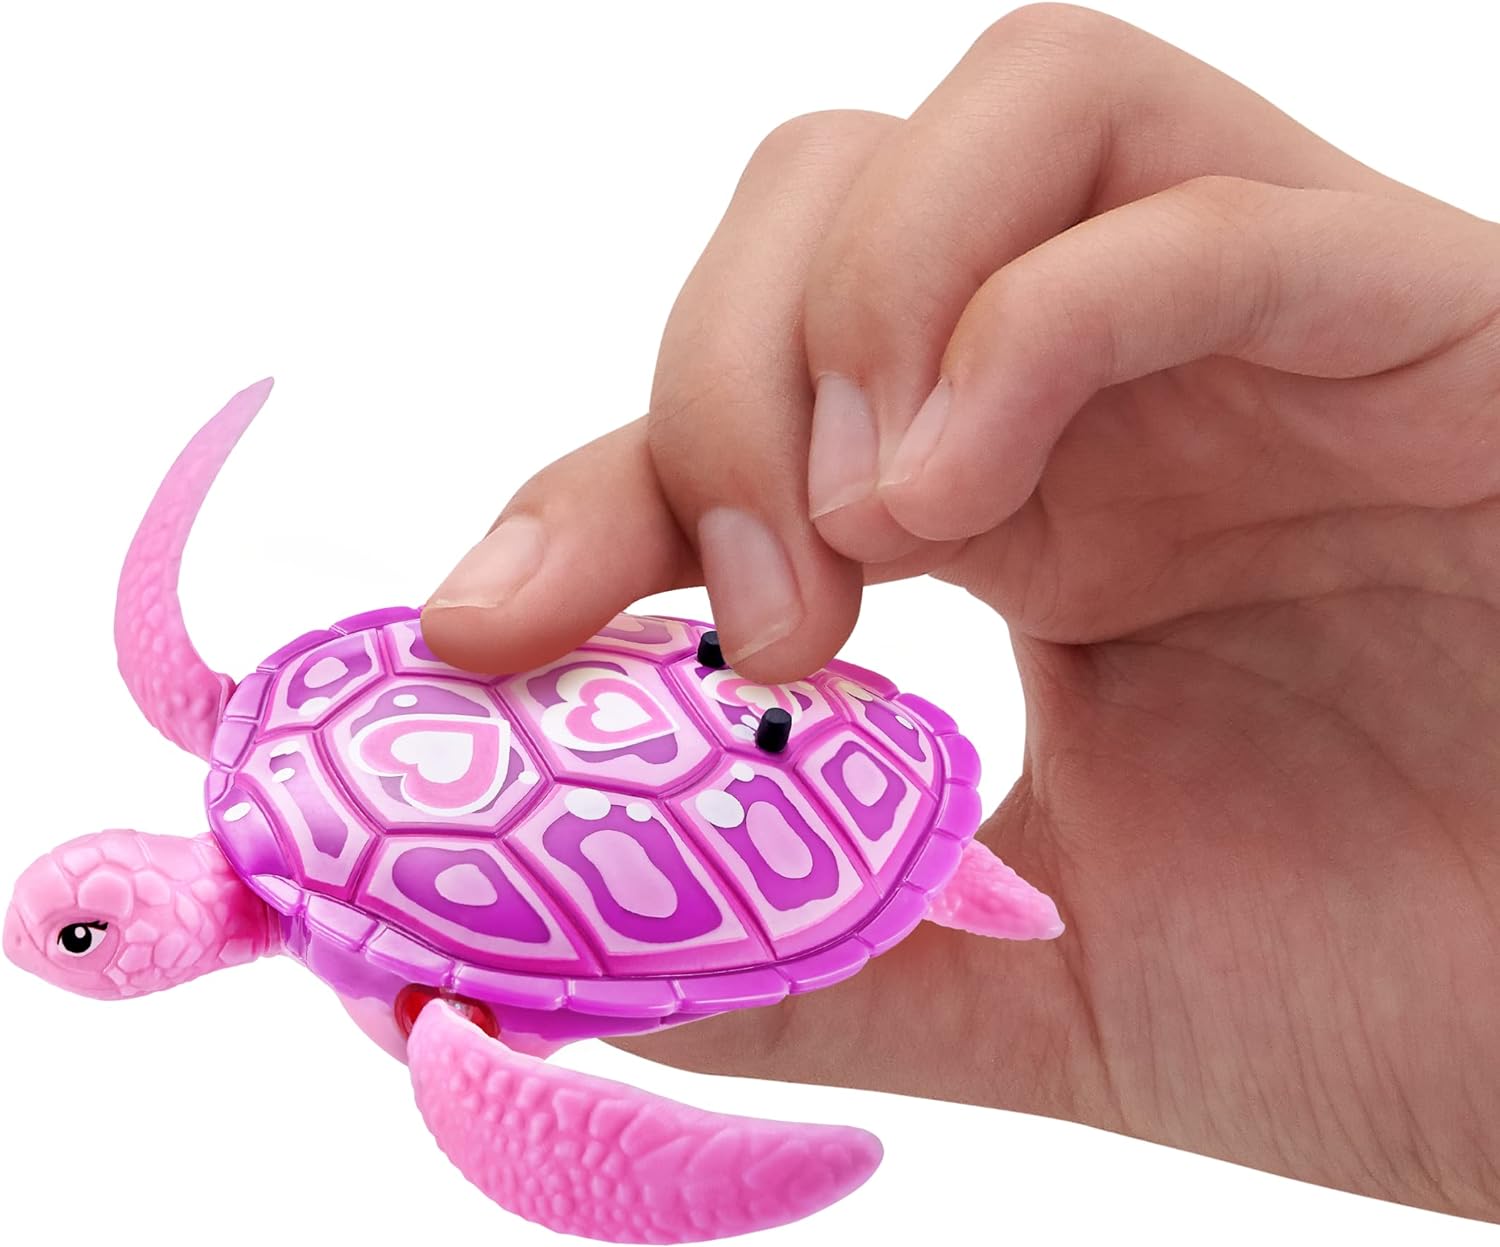 ZURU S001-Robo Alive Series 1 Turtle for Kids, Multicolor - Pink